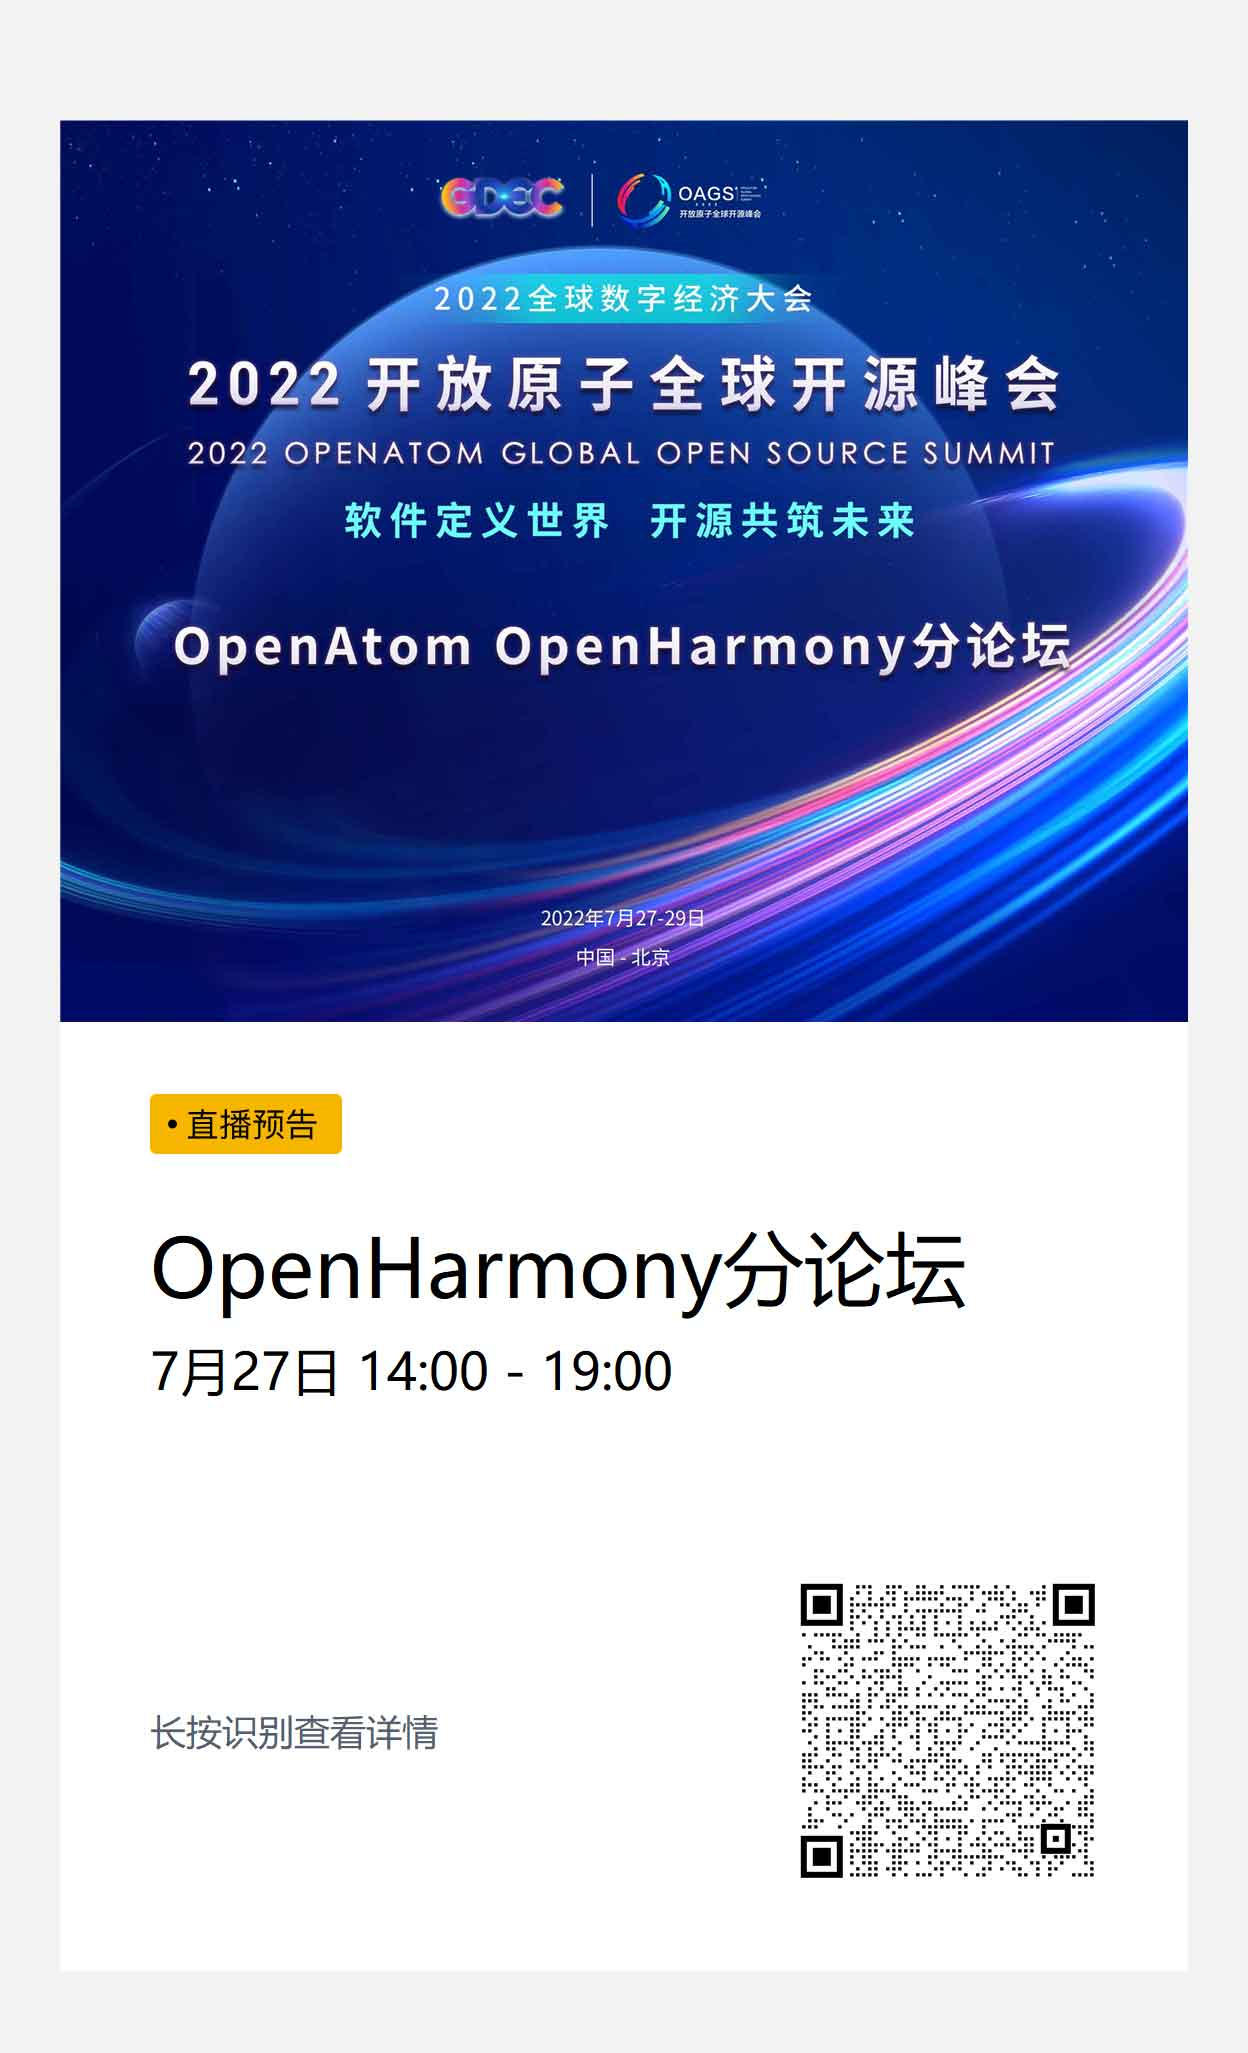 OpenAtom OpenHarmony分论坛，今天14：00见！附大事记精彩发布-开源基础软件社区